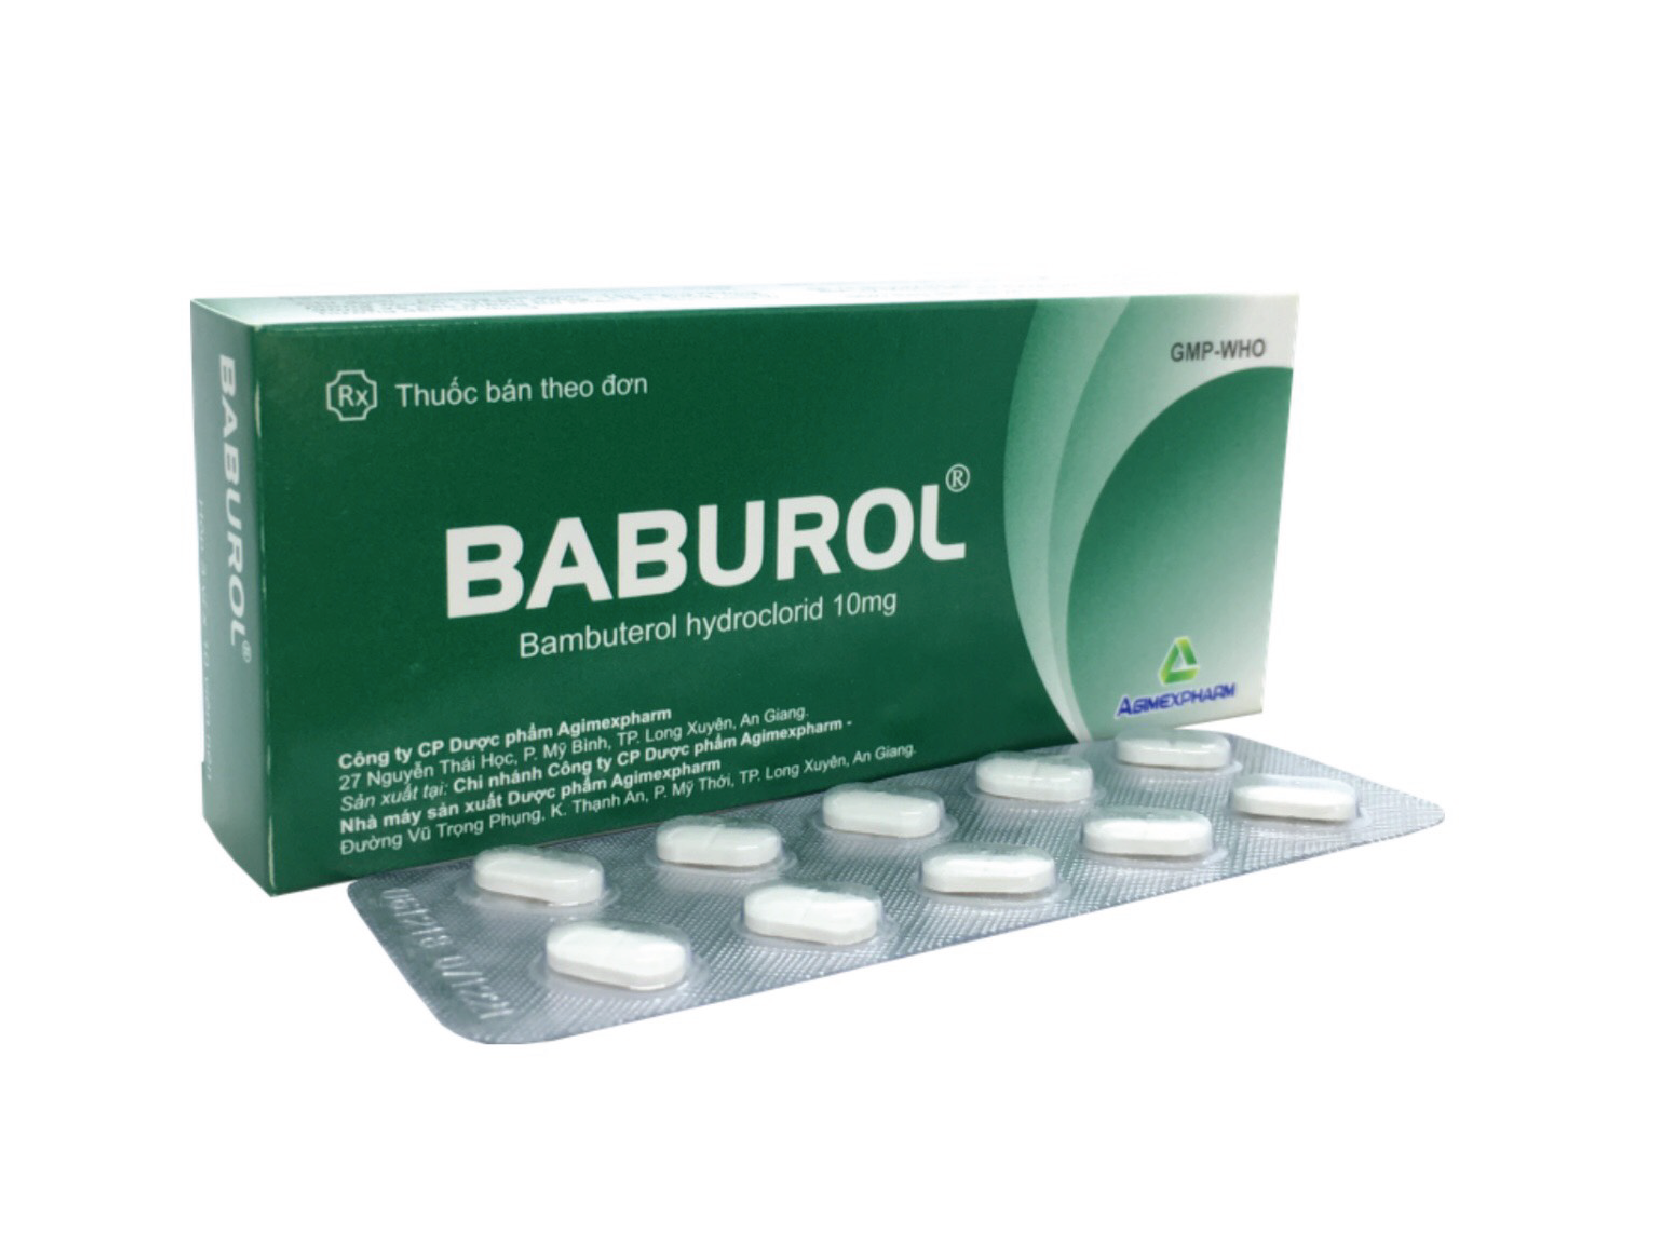 Baburol (Bambuterol) 10mg Agimexpharm (H/30v)